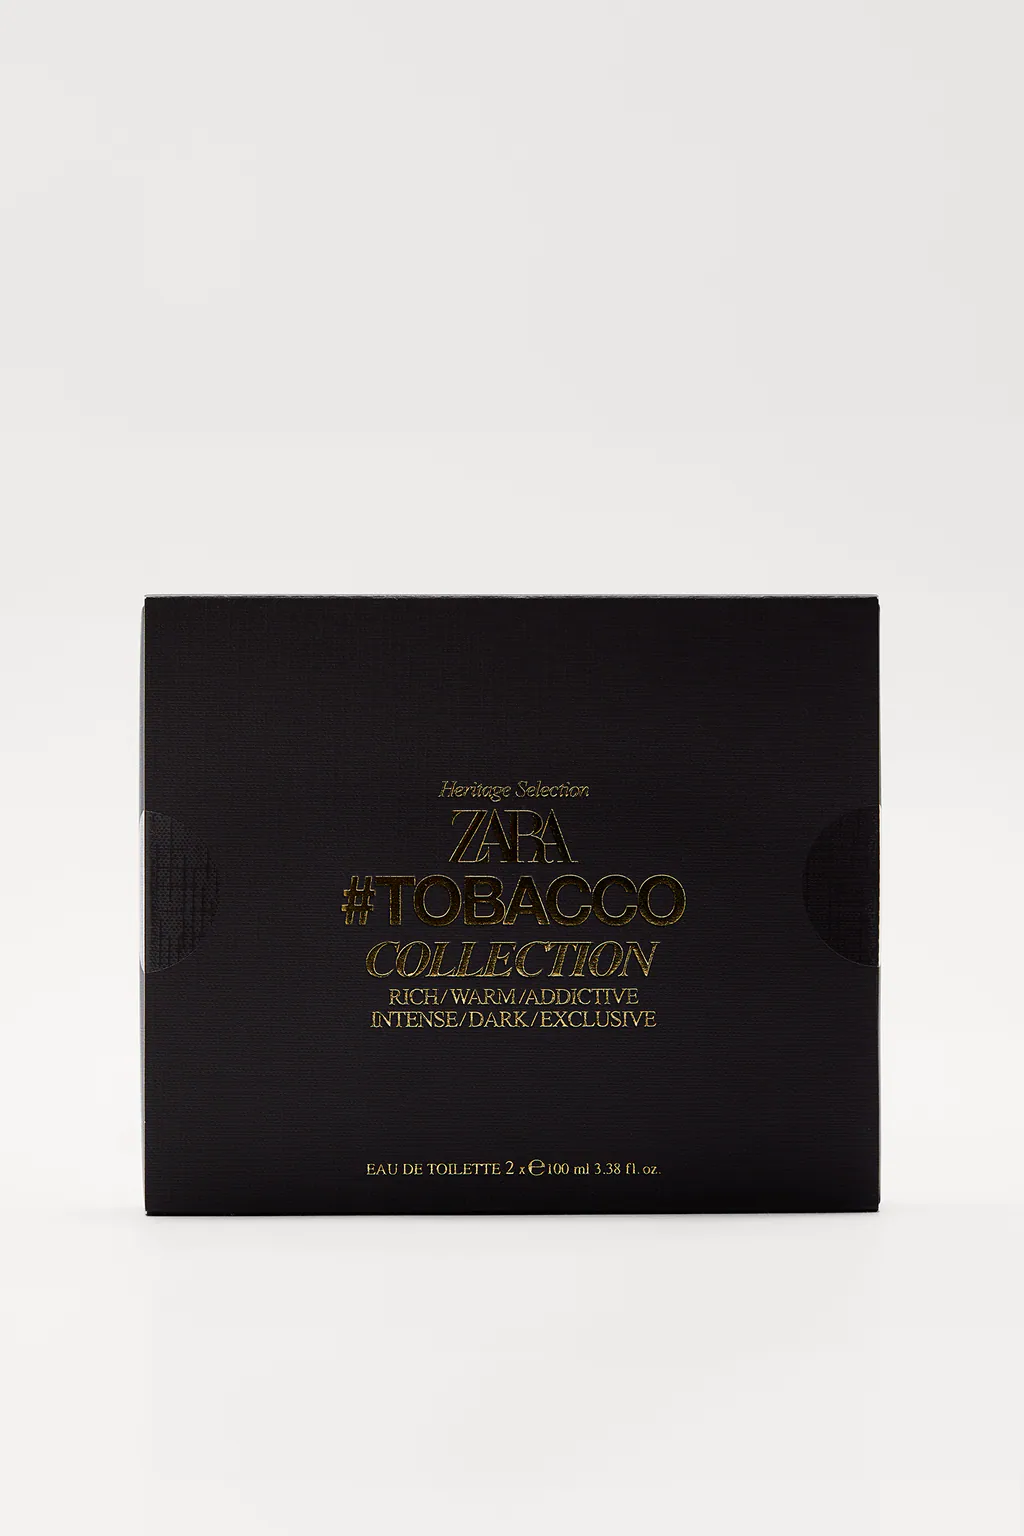 Tobacco Collection Intense Dark Exclusive Zara cologne - a